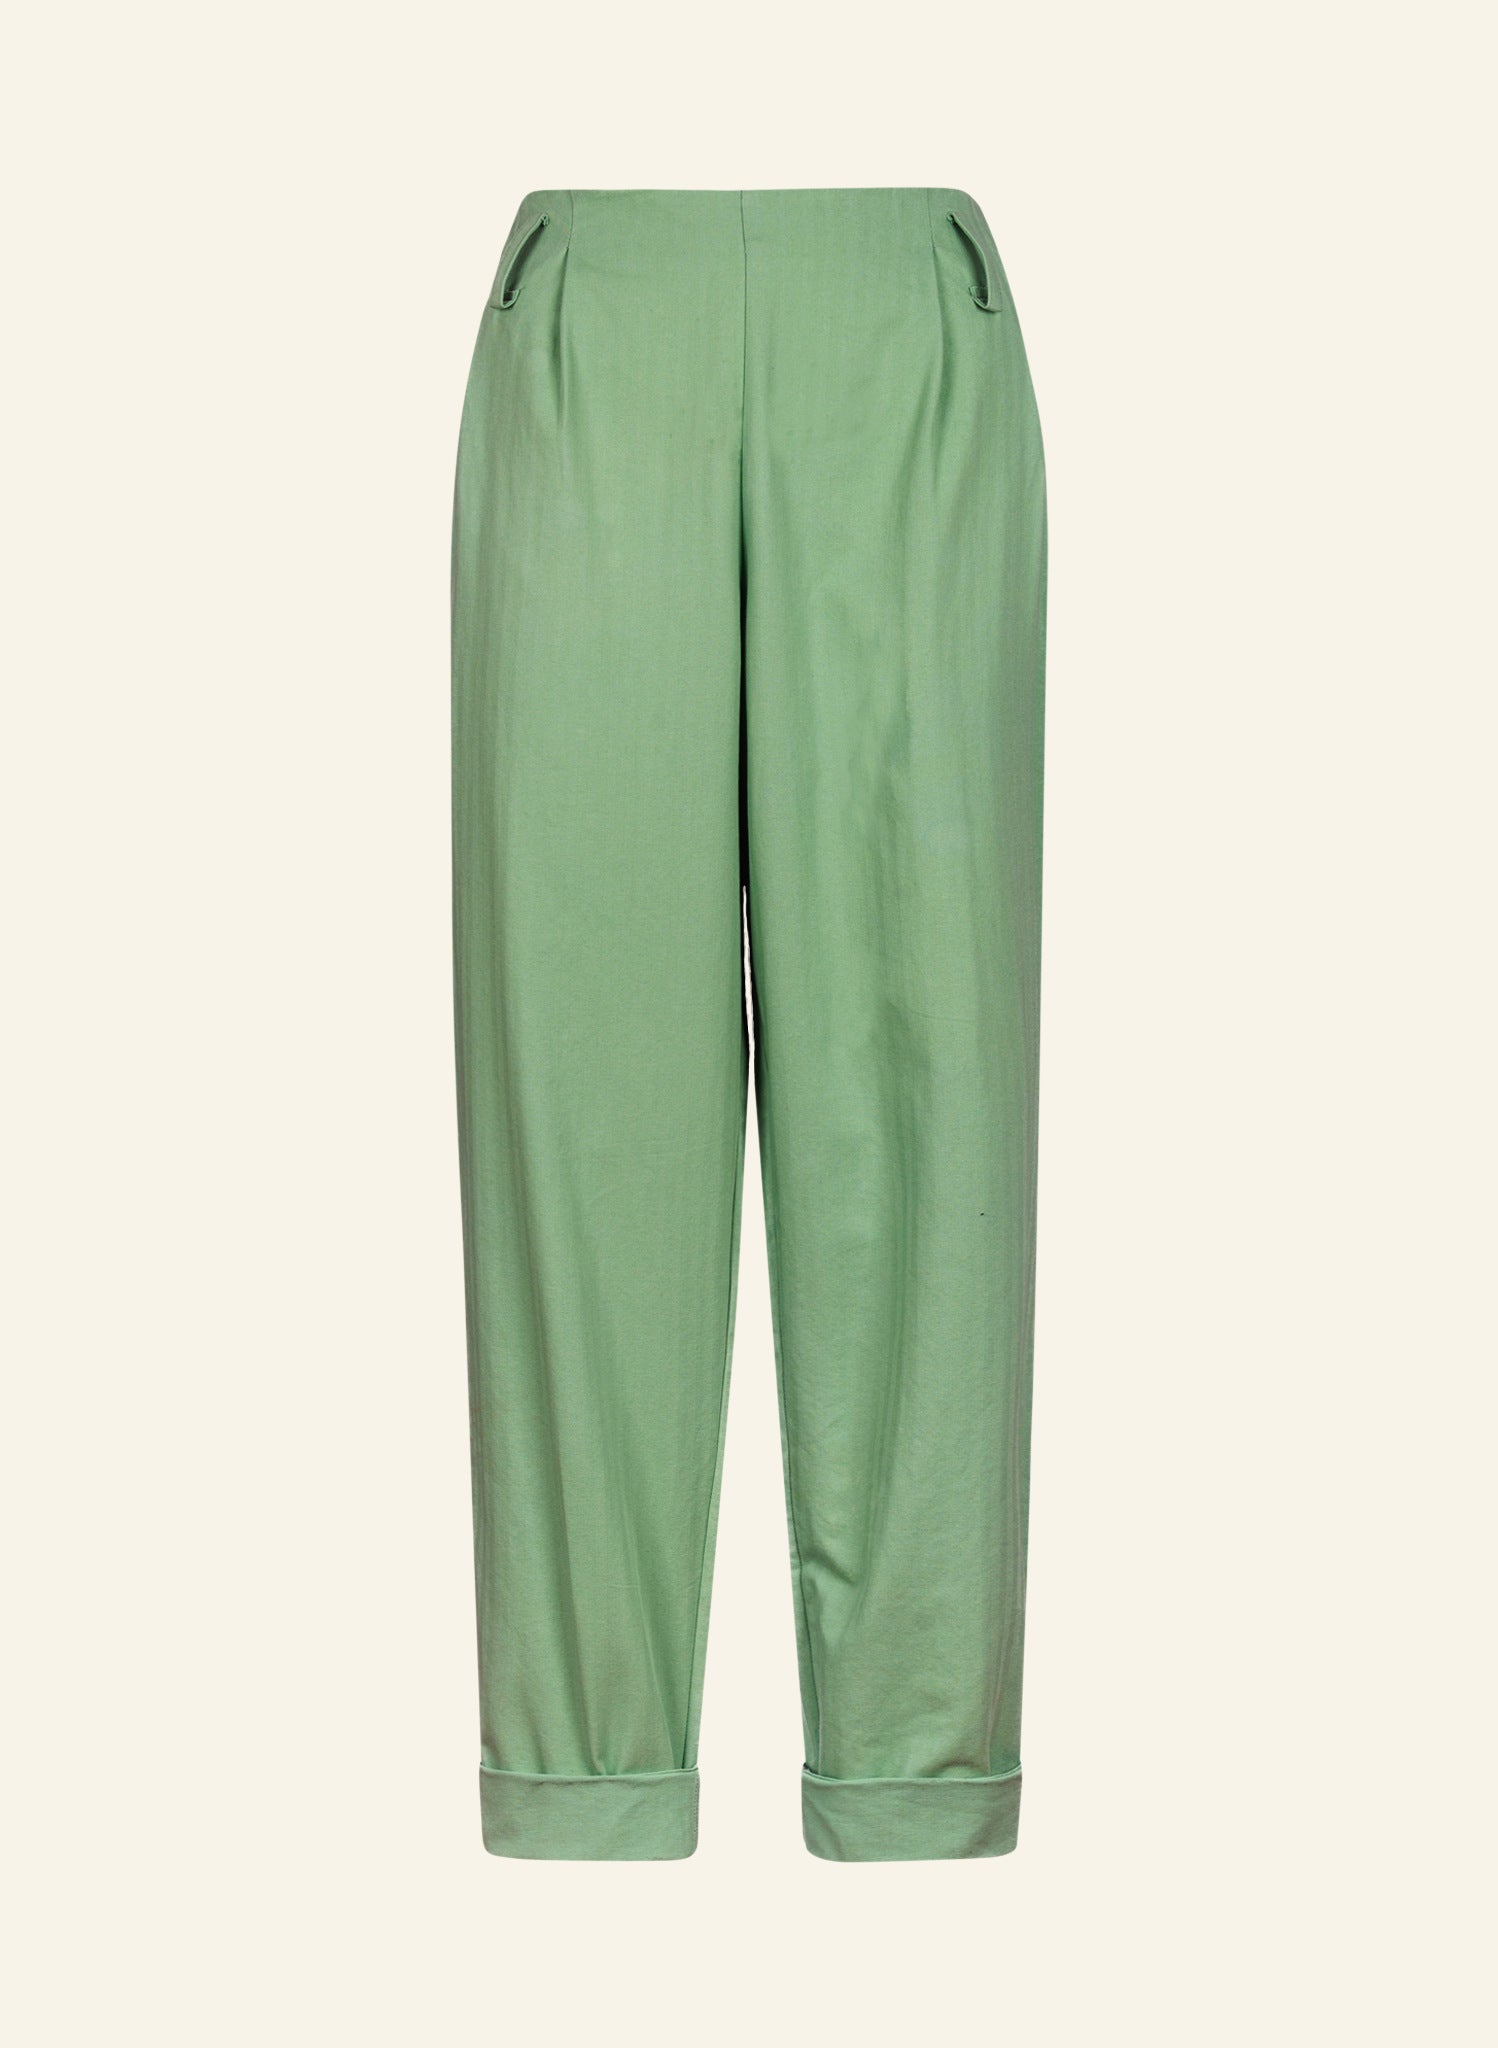 Wilma - Peapod Green Cotton Trousers